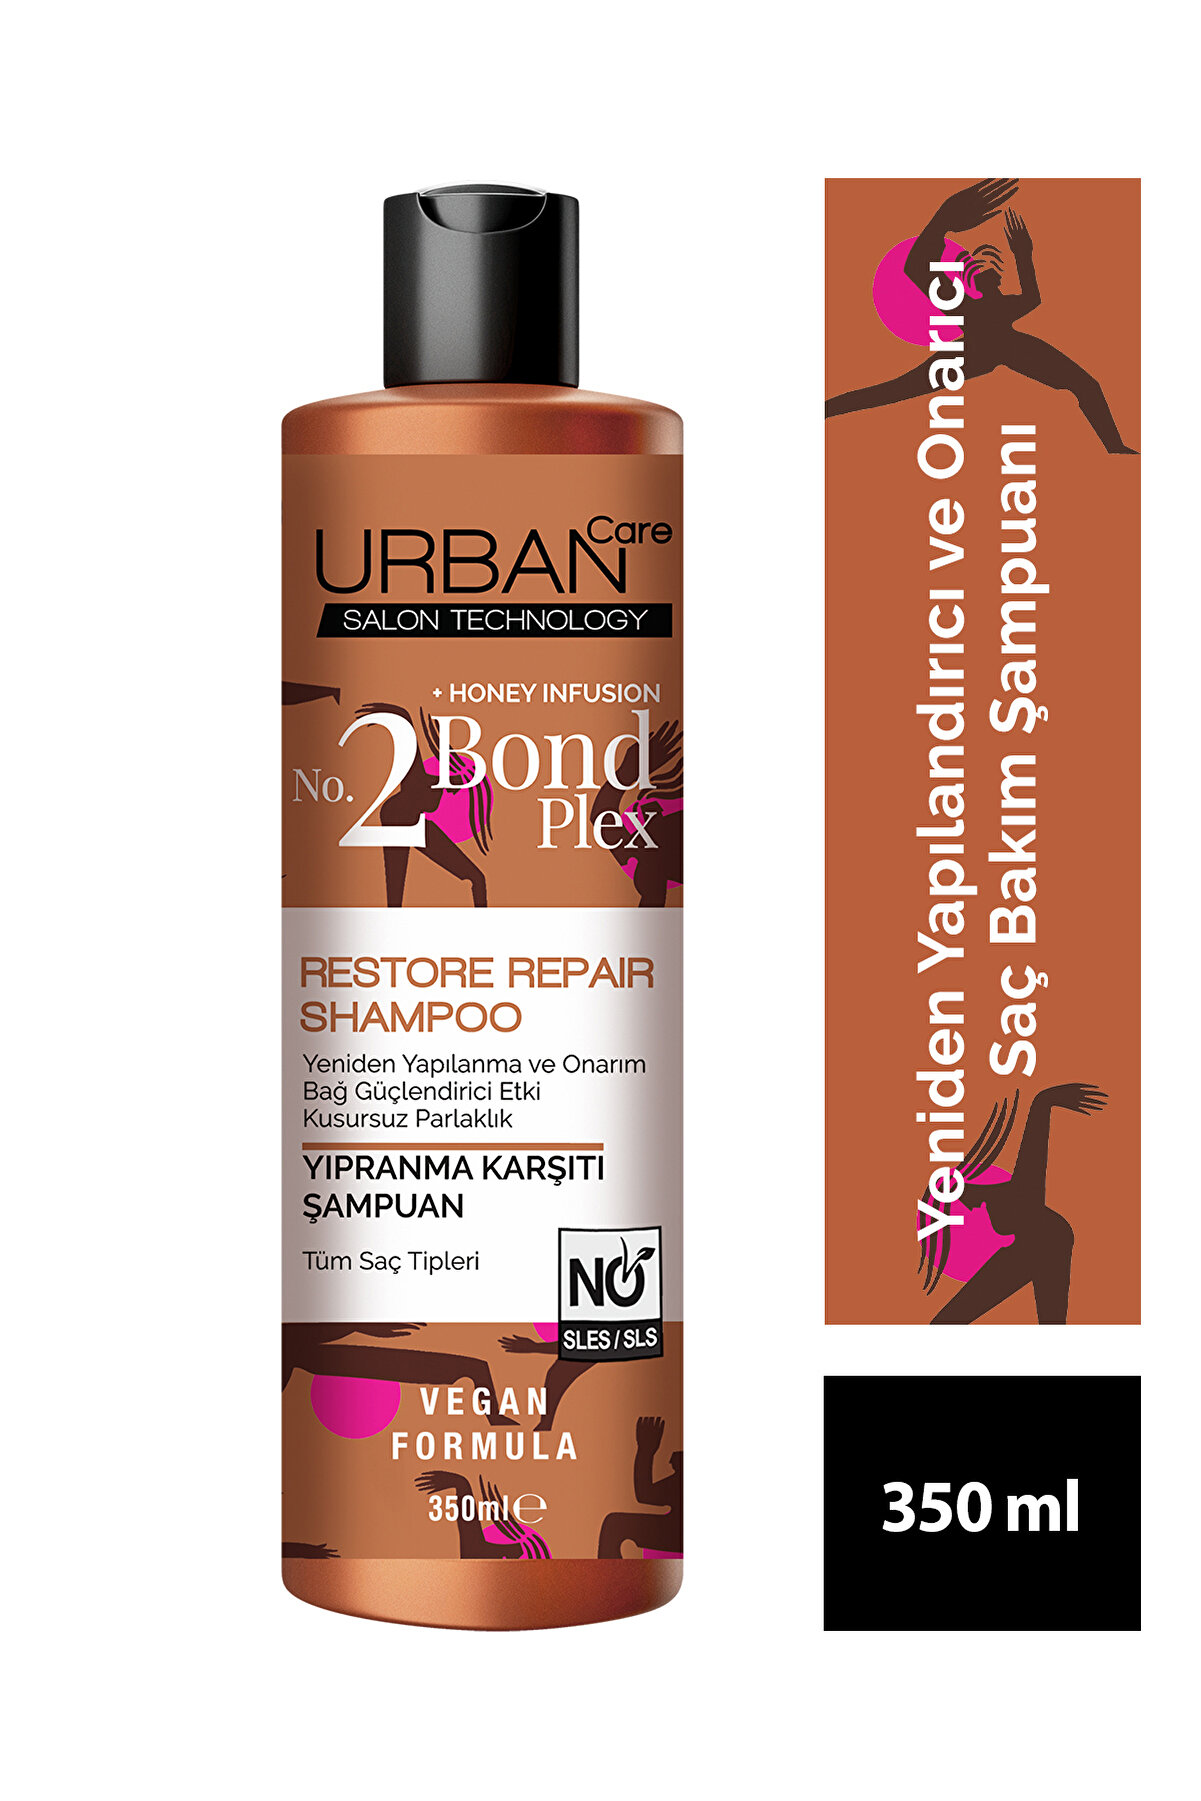 Urban Care No.2 Bond Plex Restore Repair Yıpranma Karşıtı Saç Bakım Şampuanı 350 Ml-sülfatsız